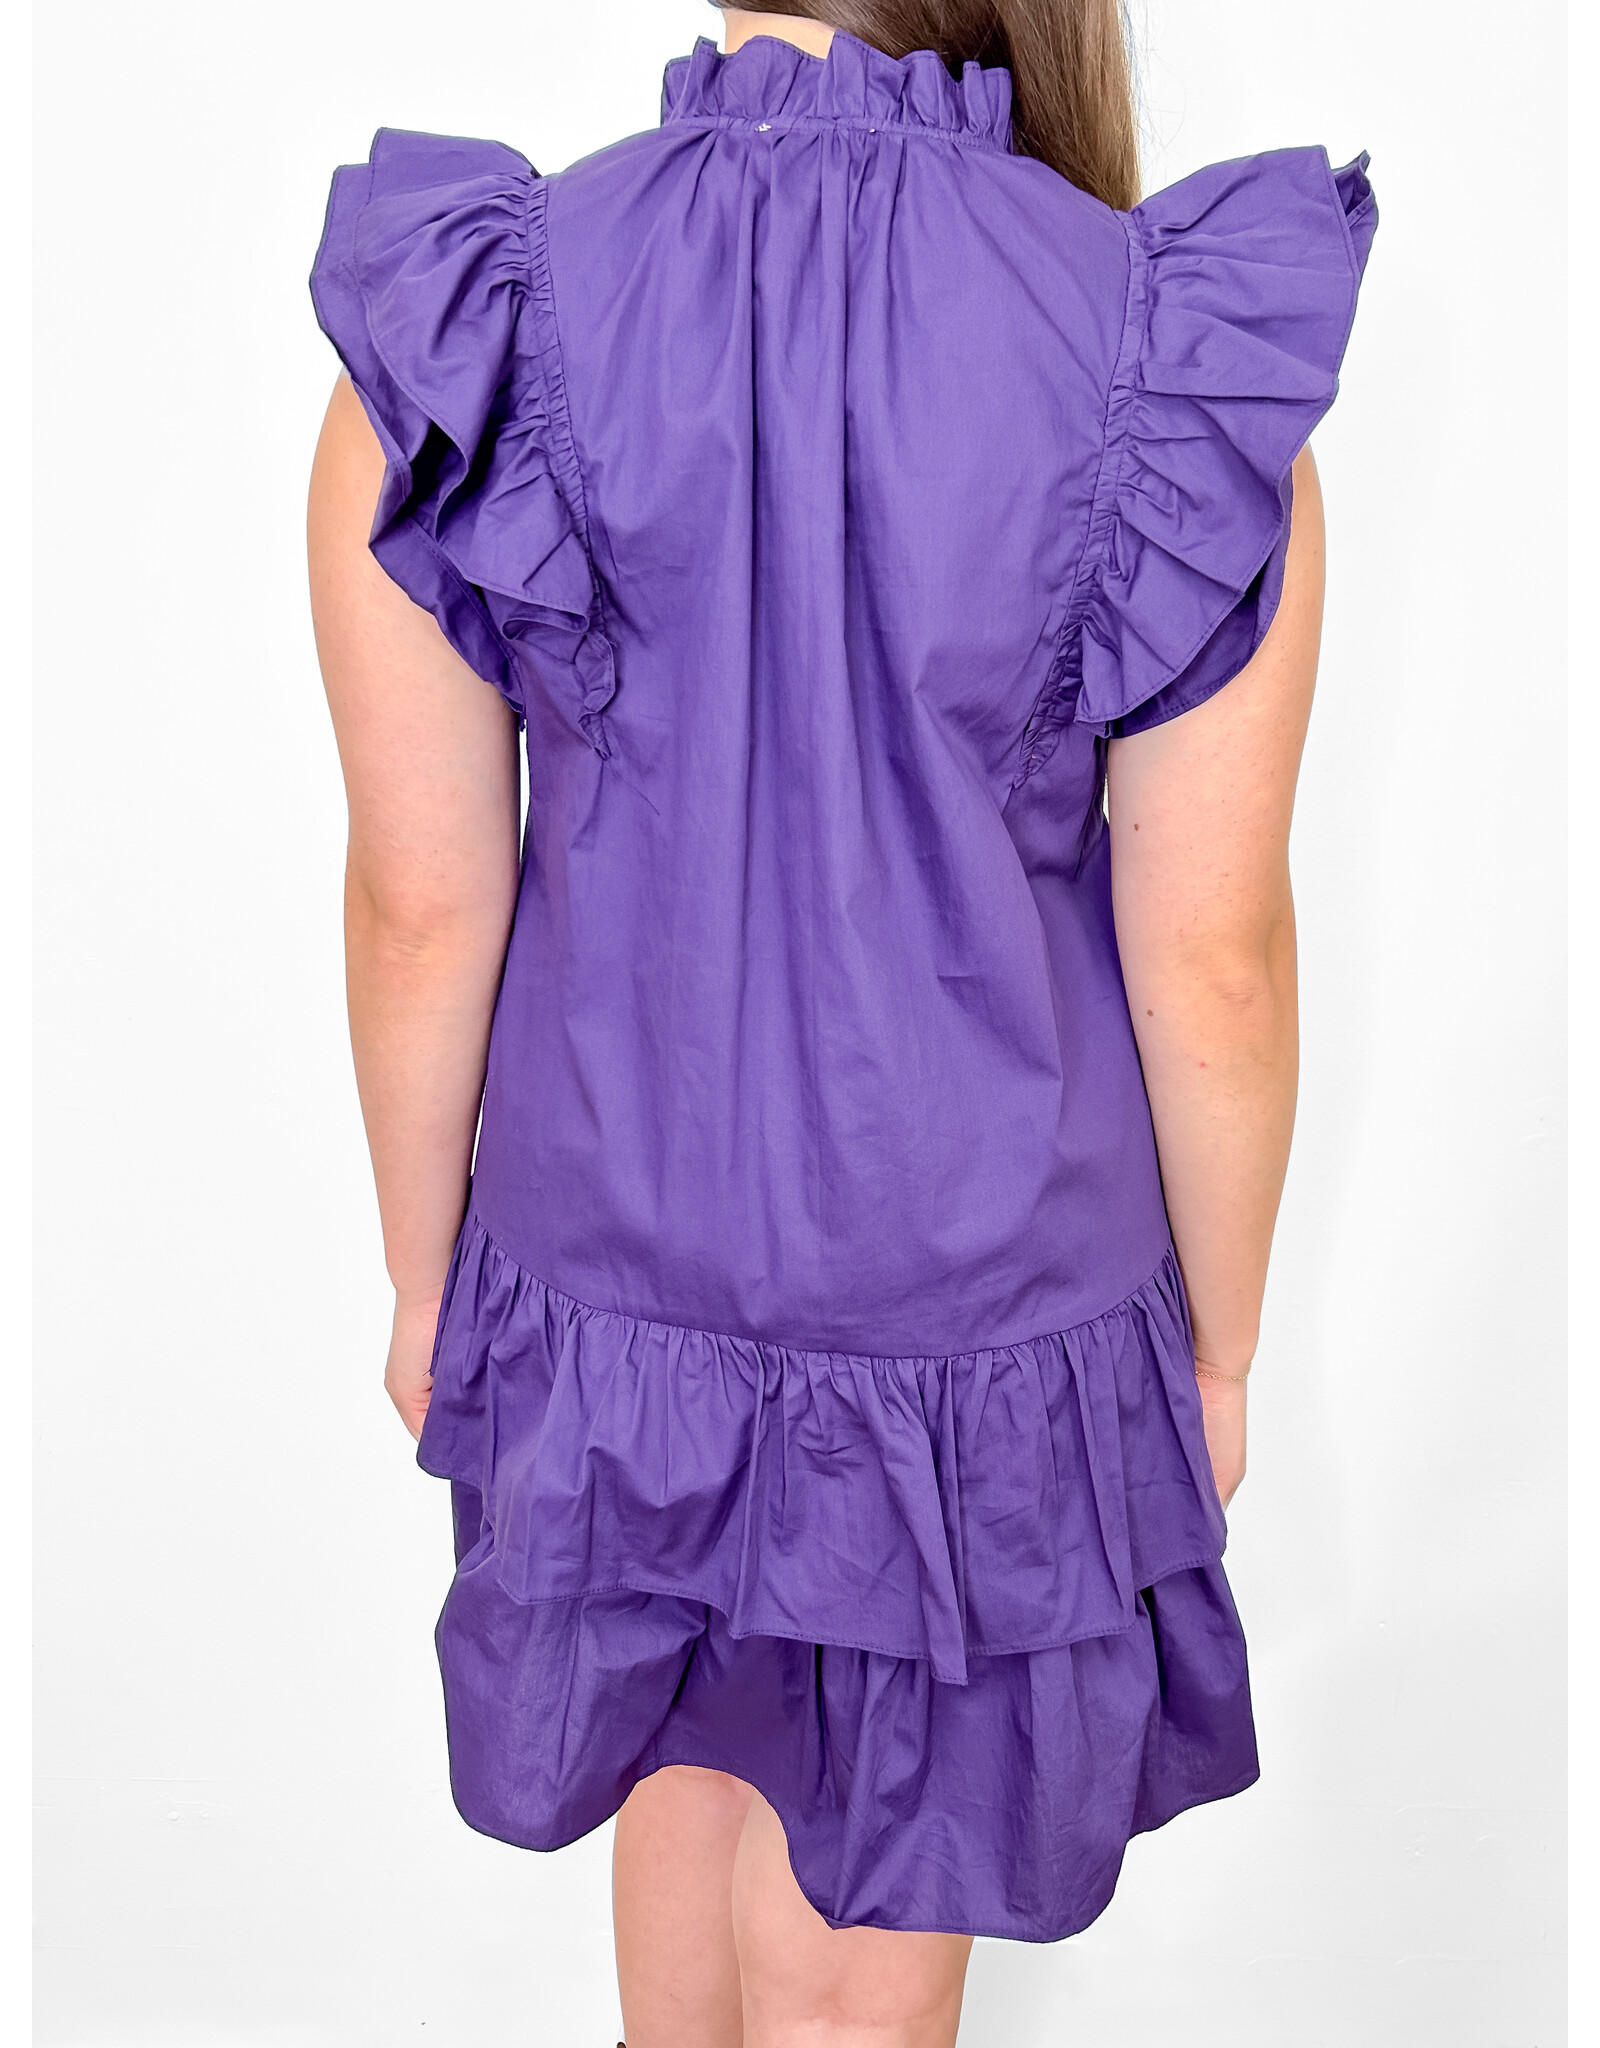 Dark Purple Star Sequin Dress